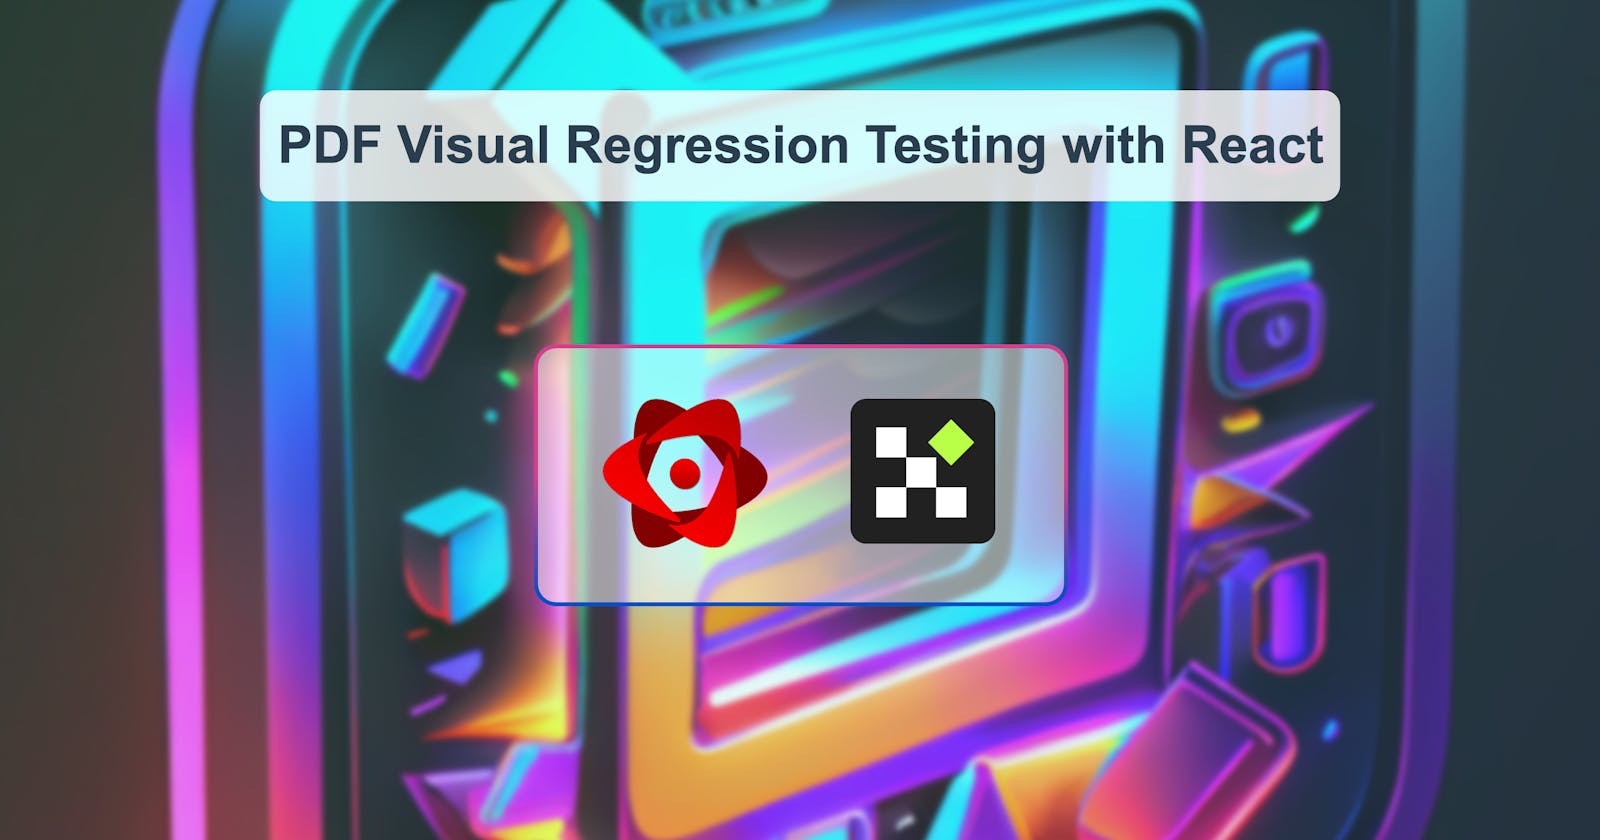 PDF visual regression testing